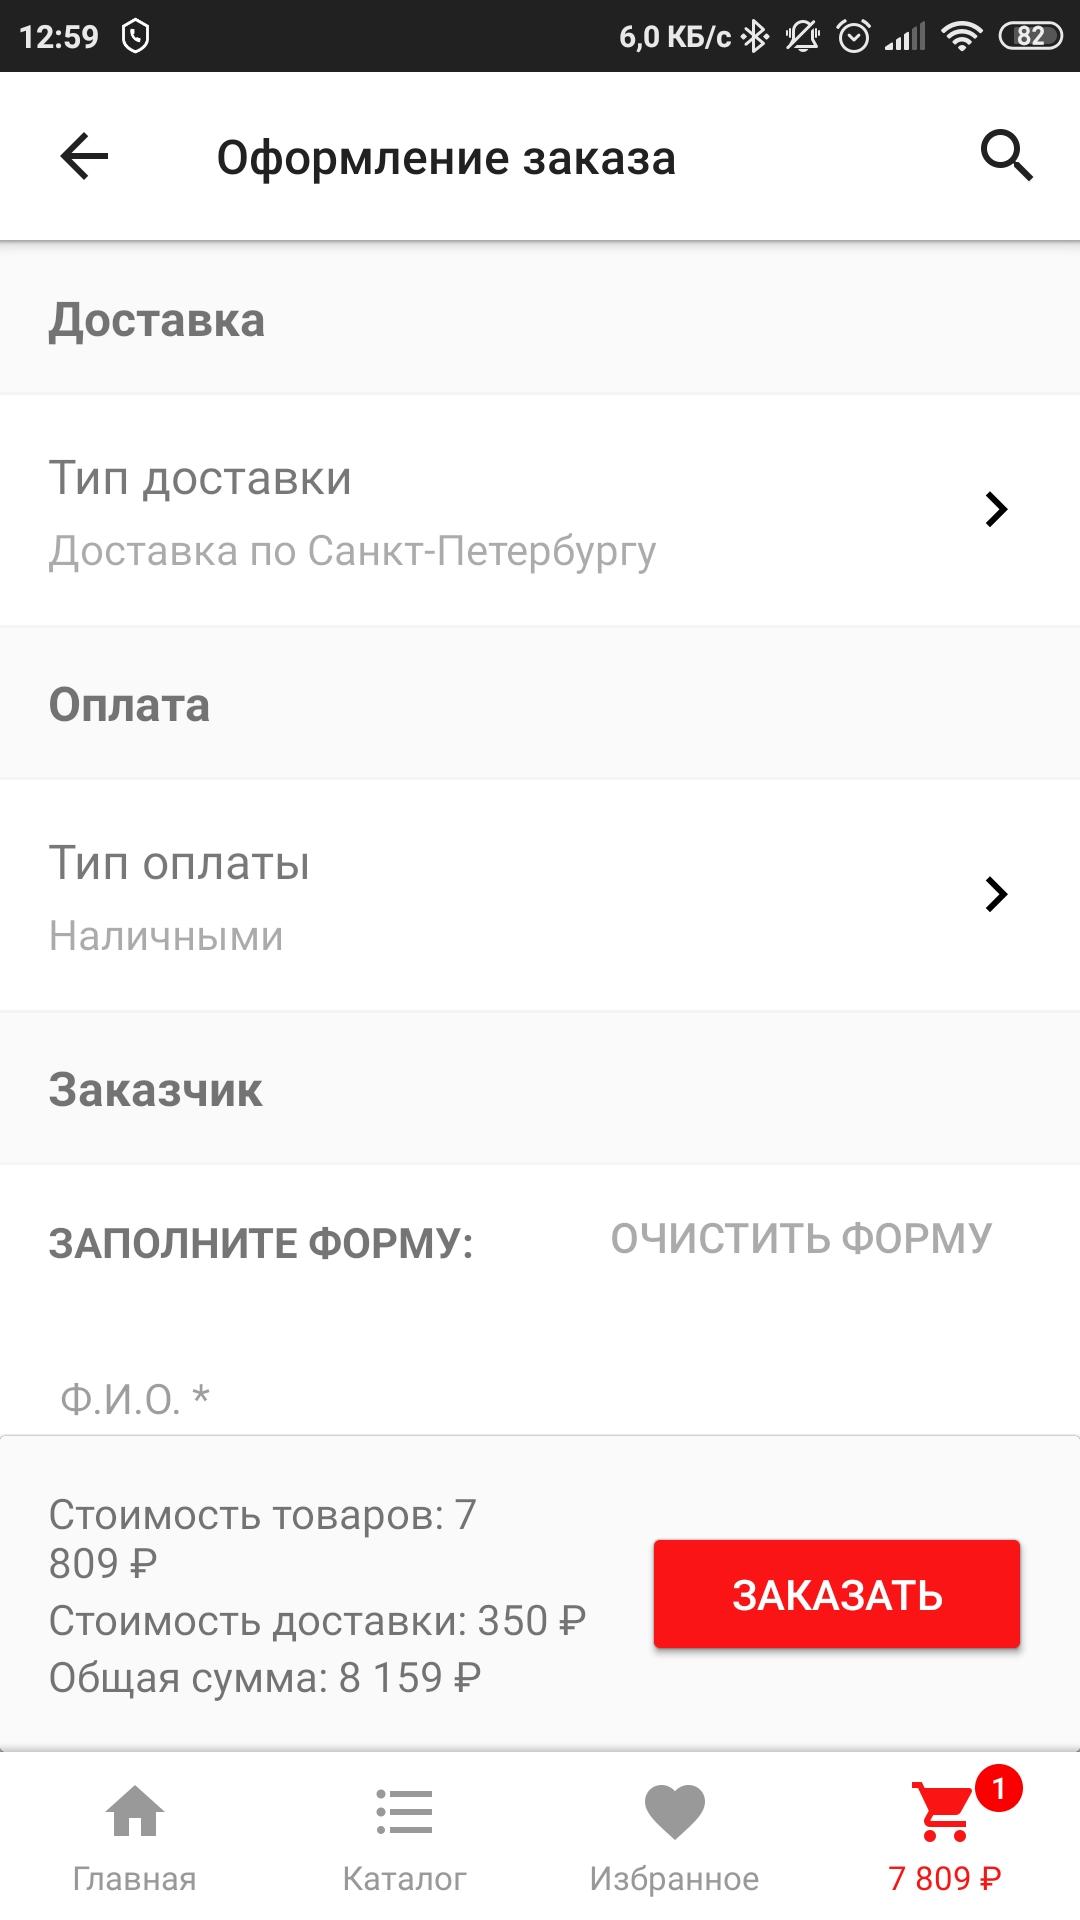 DTLshop.ru - detaling market 4.177.A.0 Screenshot 21